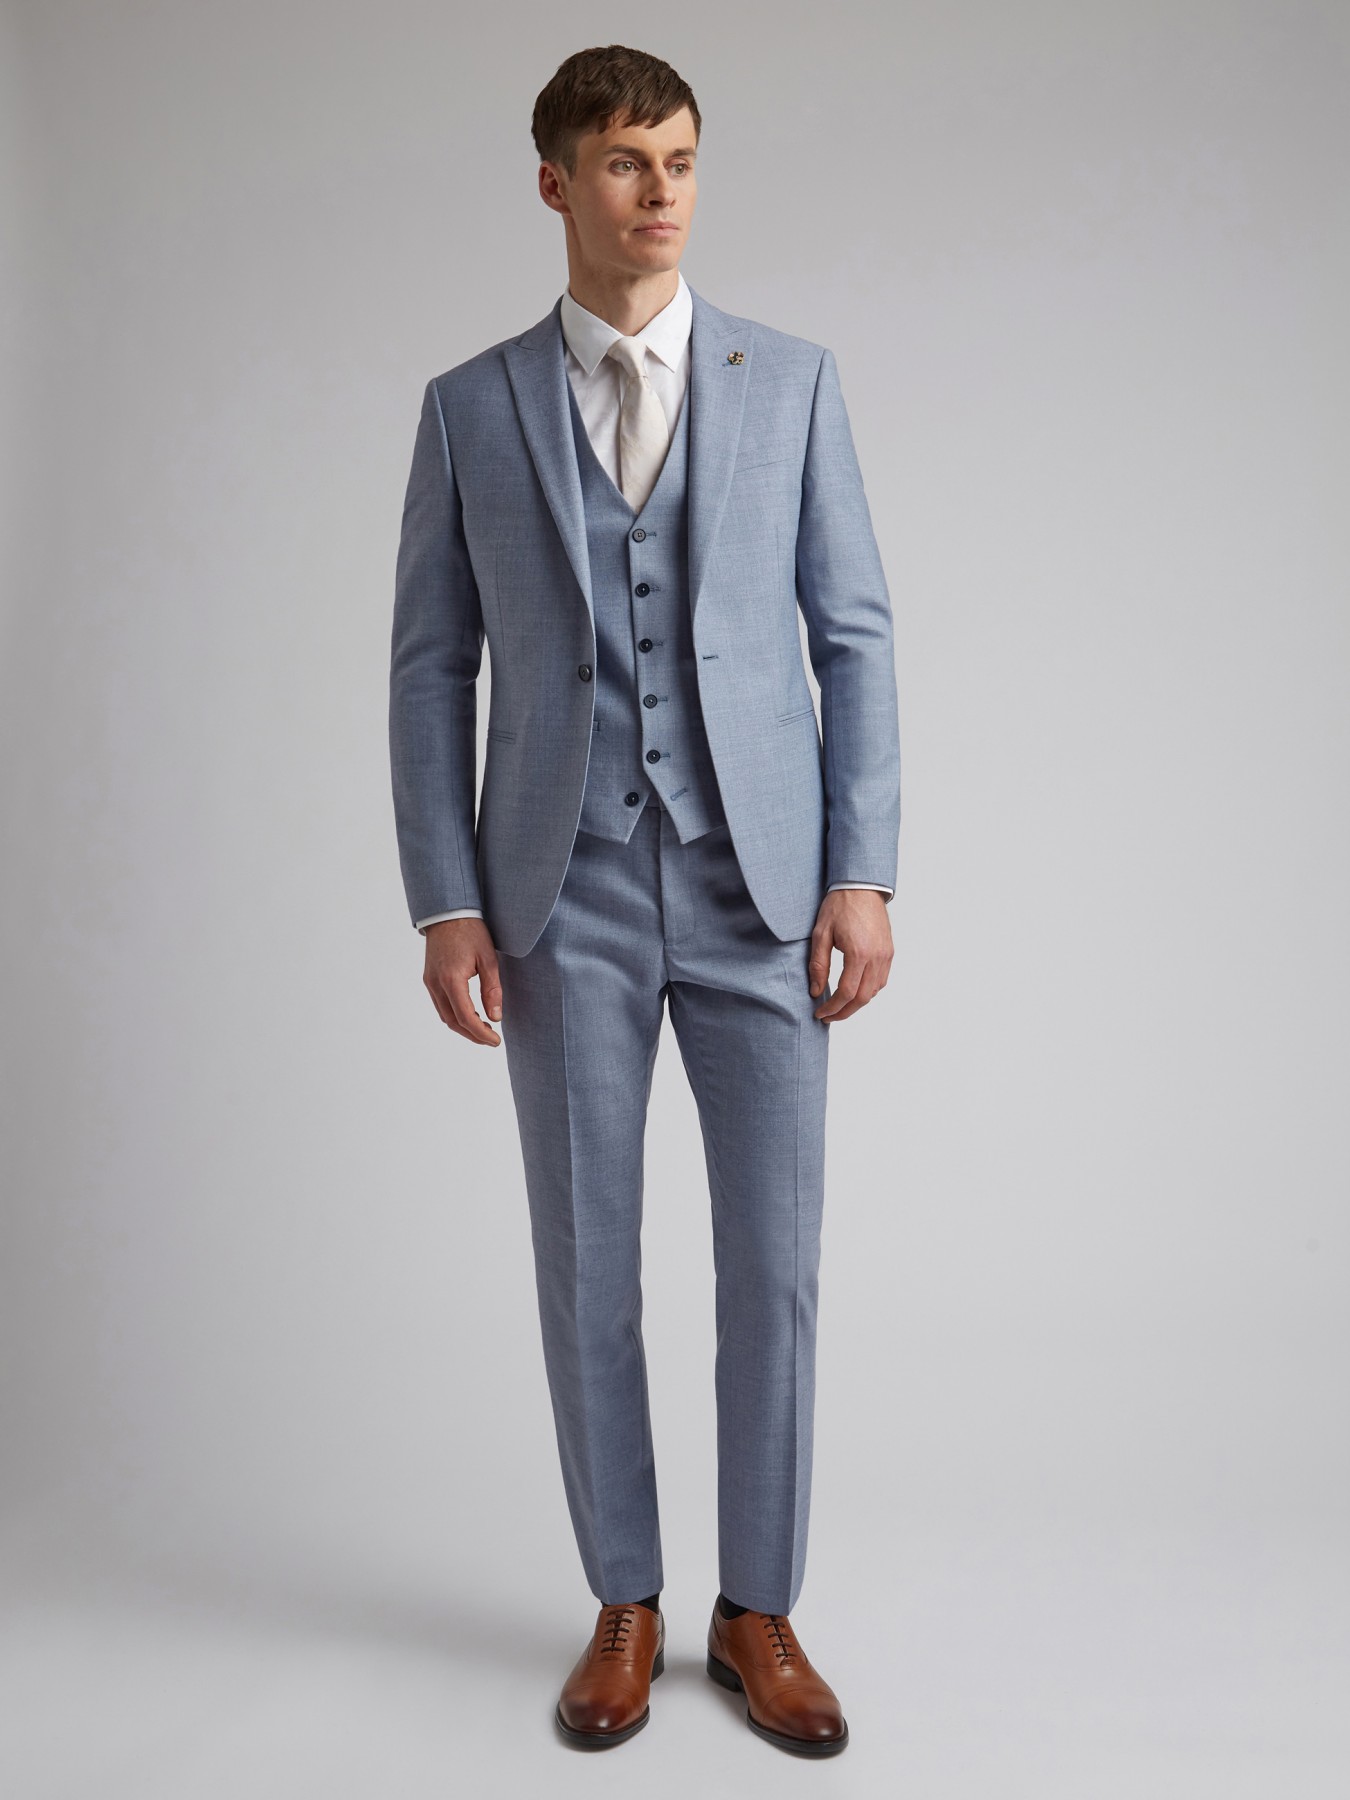 Ted Baker Light Blue Suit | coles-menswear.co.uk